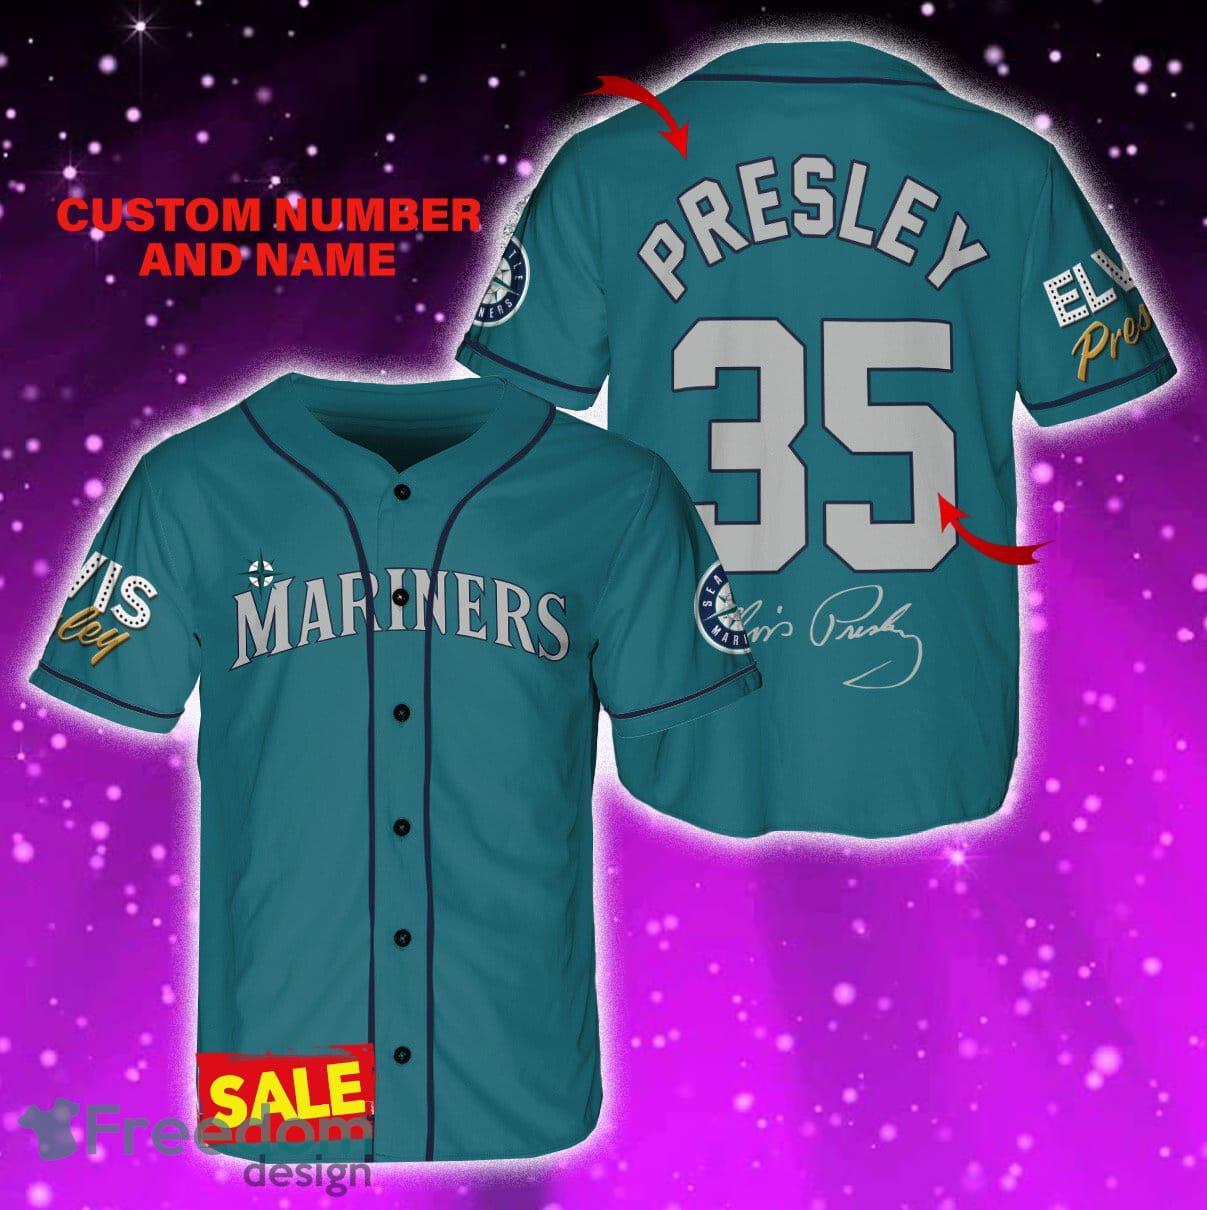 Seattle Mariners Elvis Presley Jersey Baseball Shirt White Custom Number  And Name - Freedomdesign